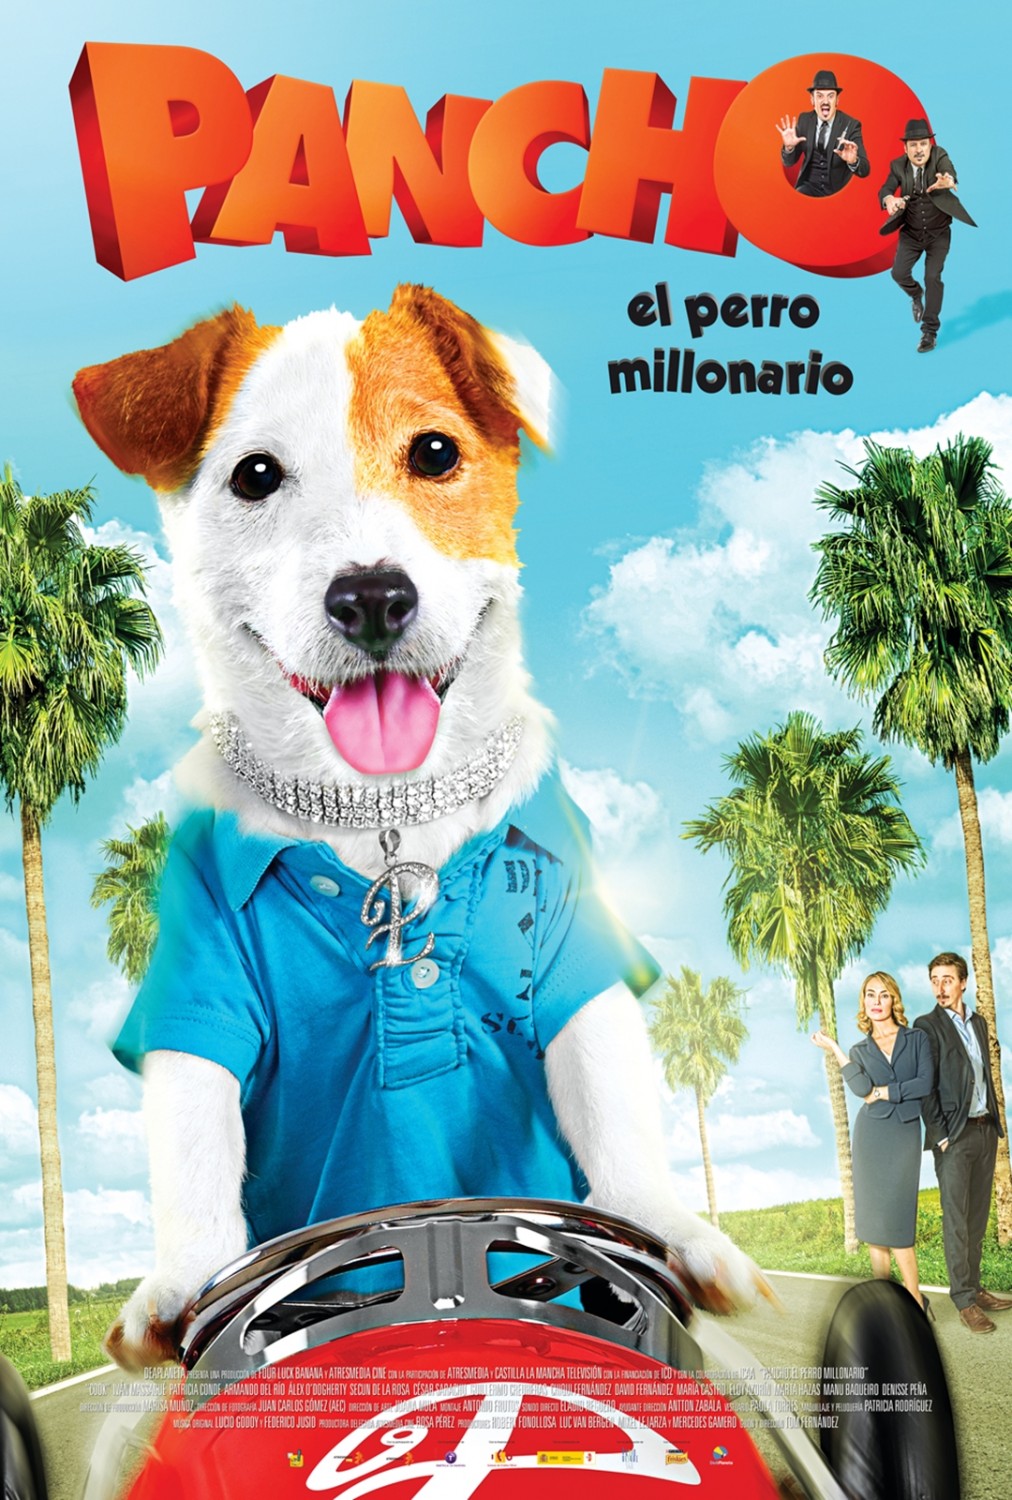 Extra Large Movie Poster Image for Pancho, el perro millonario 